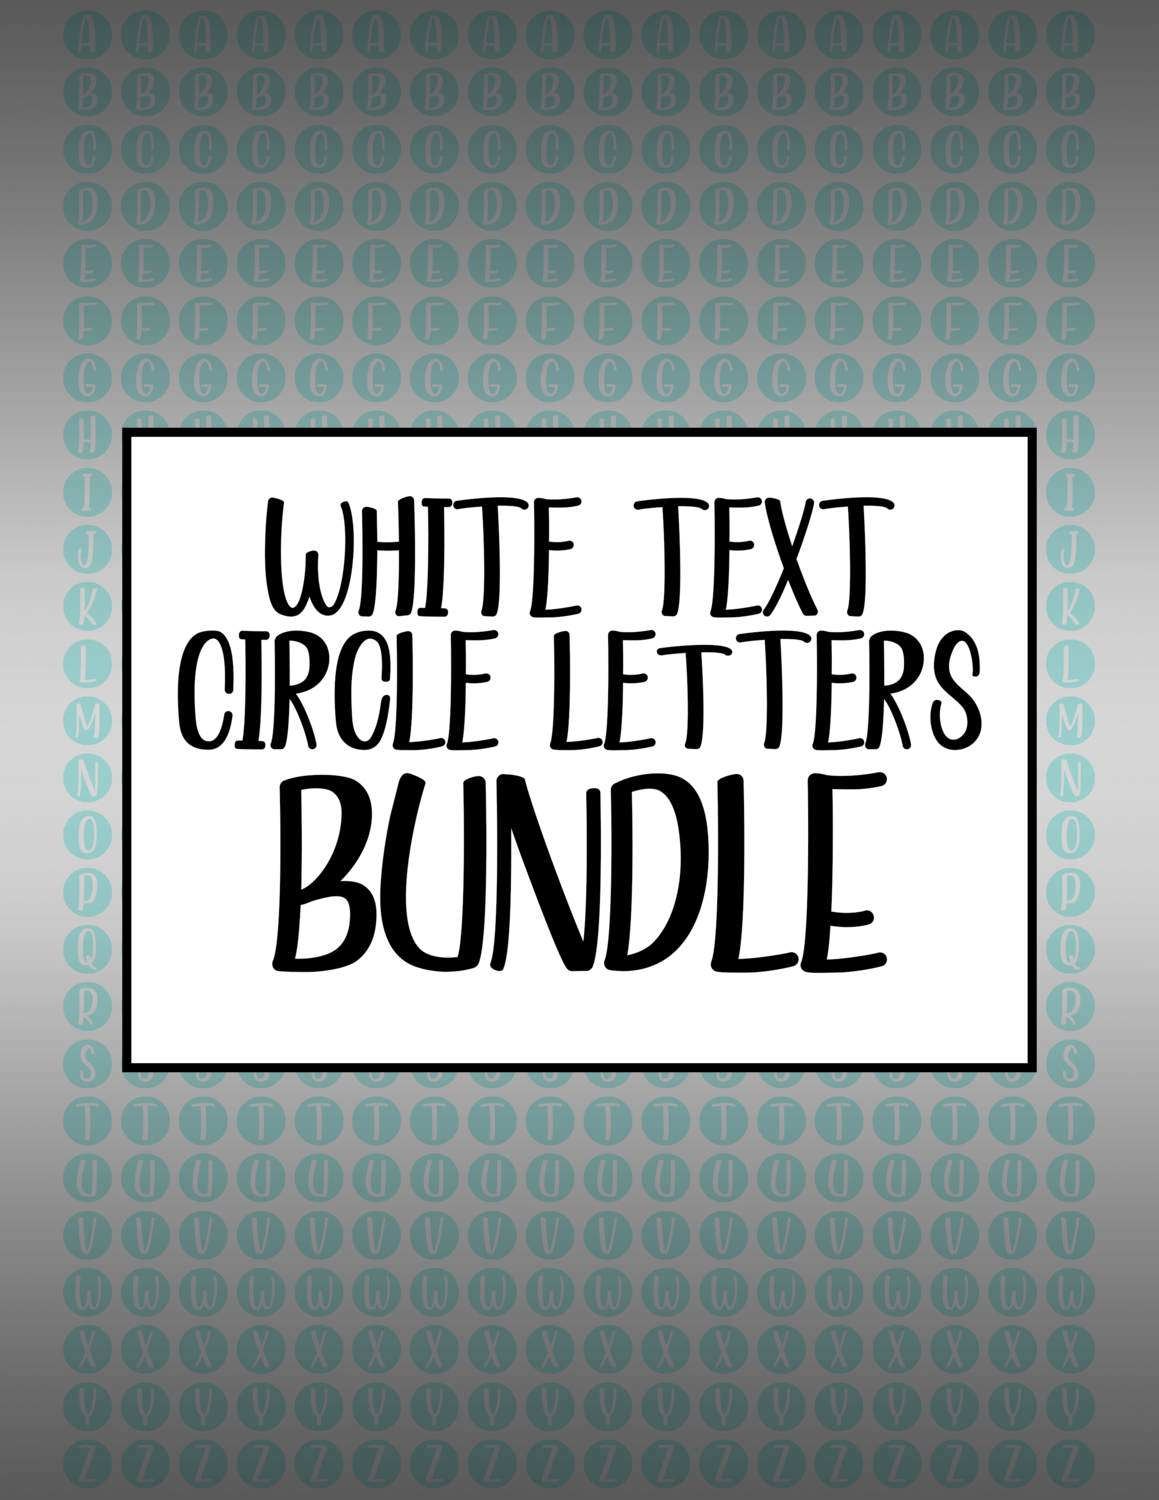 Bundle #26  "Feeling Good" Circle Letters - White Text